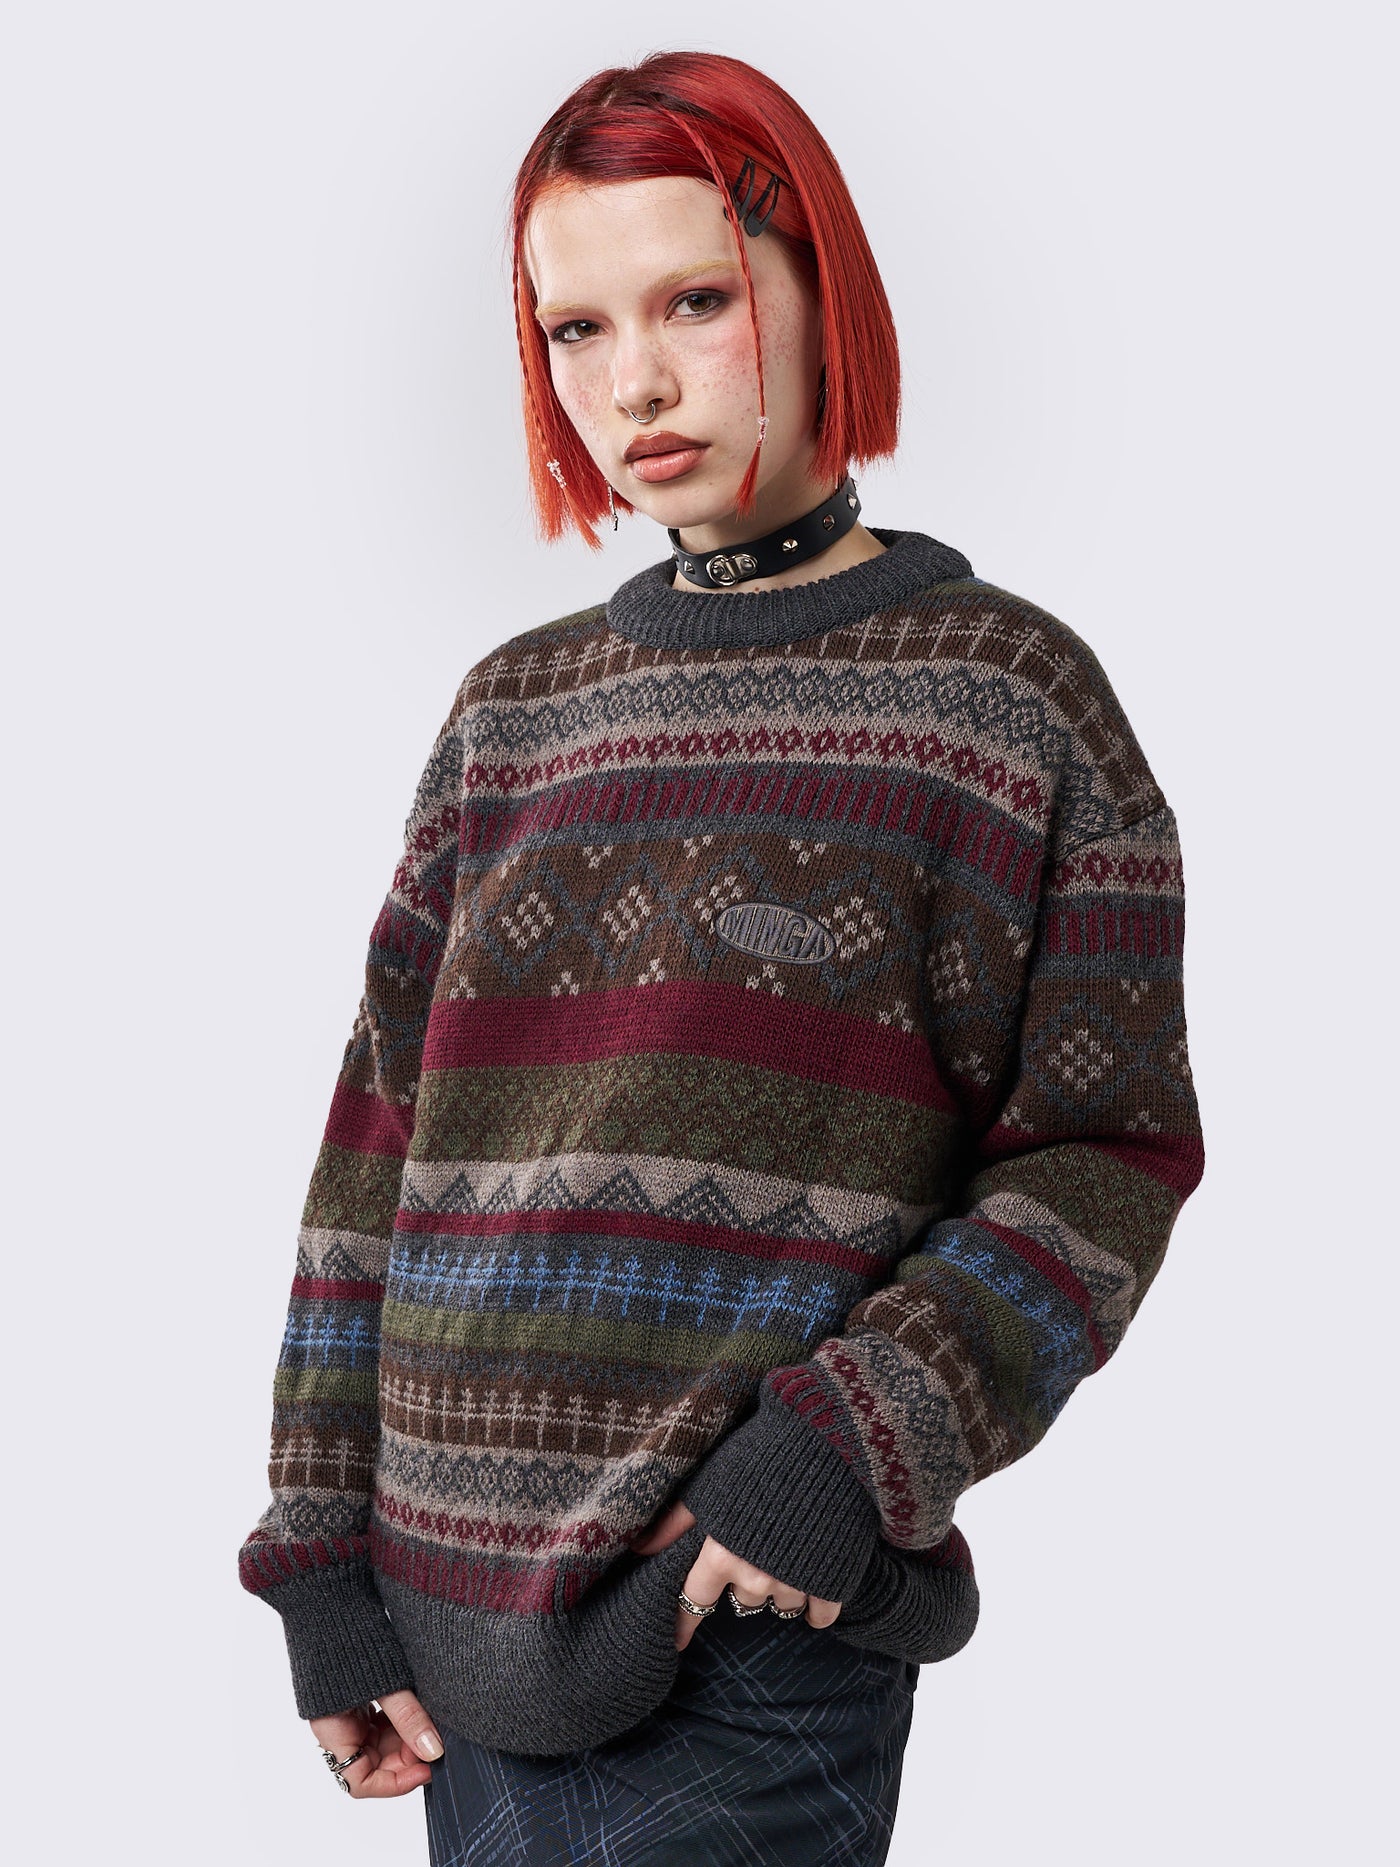 Oversized Jacquard Knit Sweater in Multicolored Geometric Stripes ...